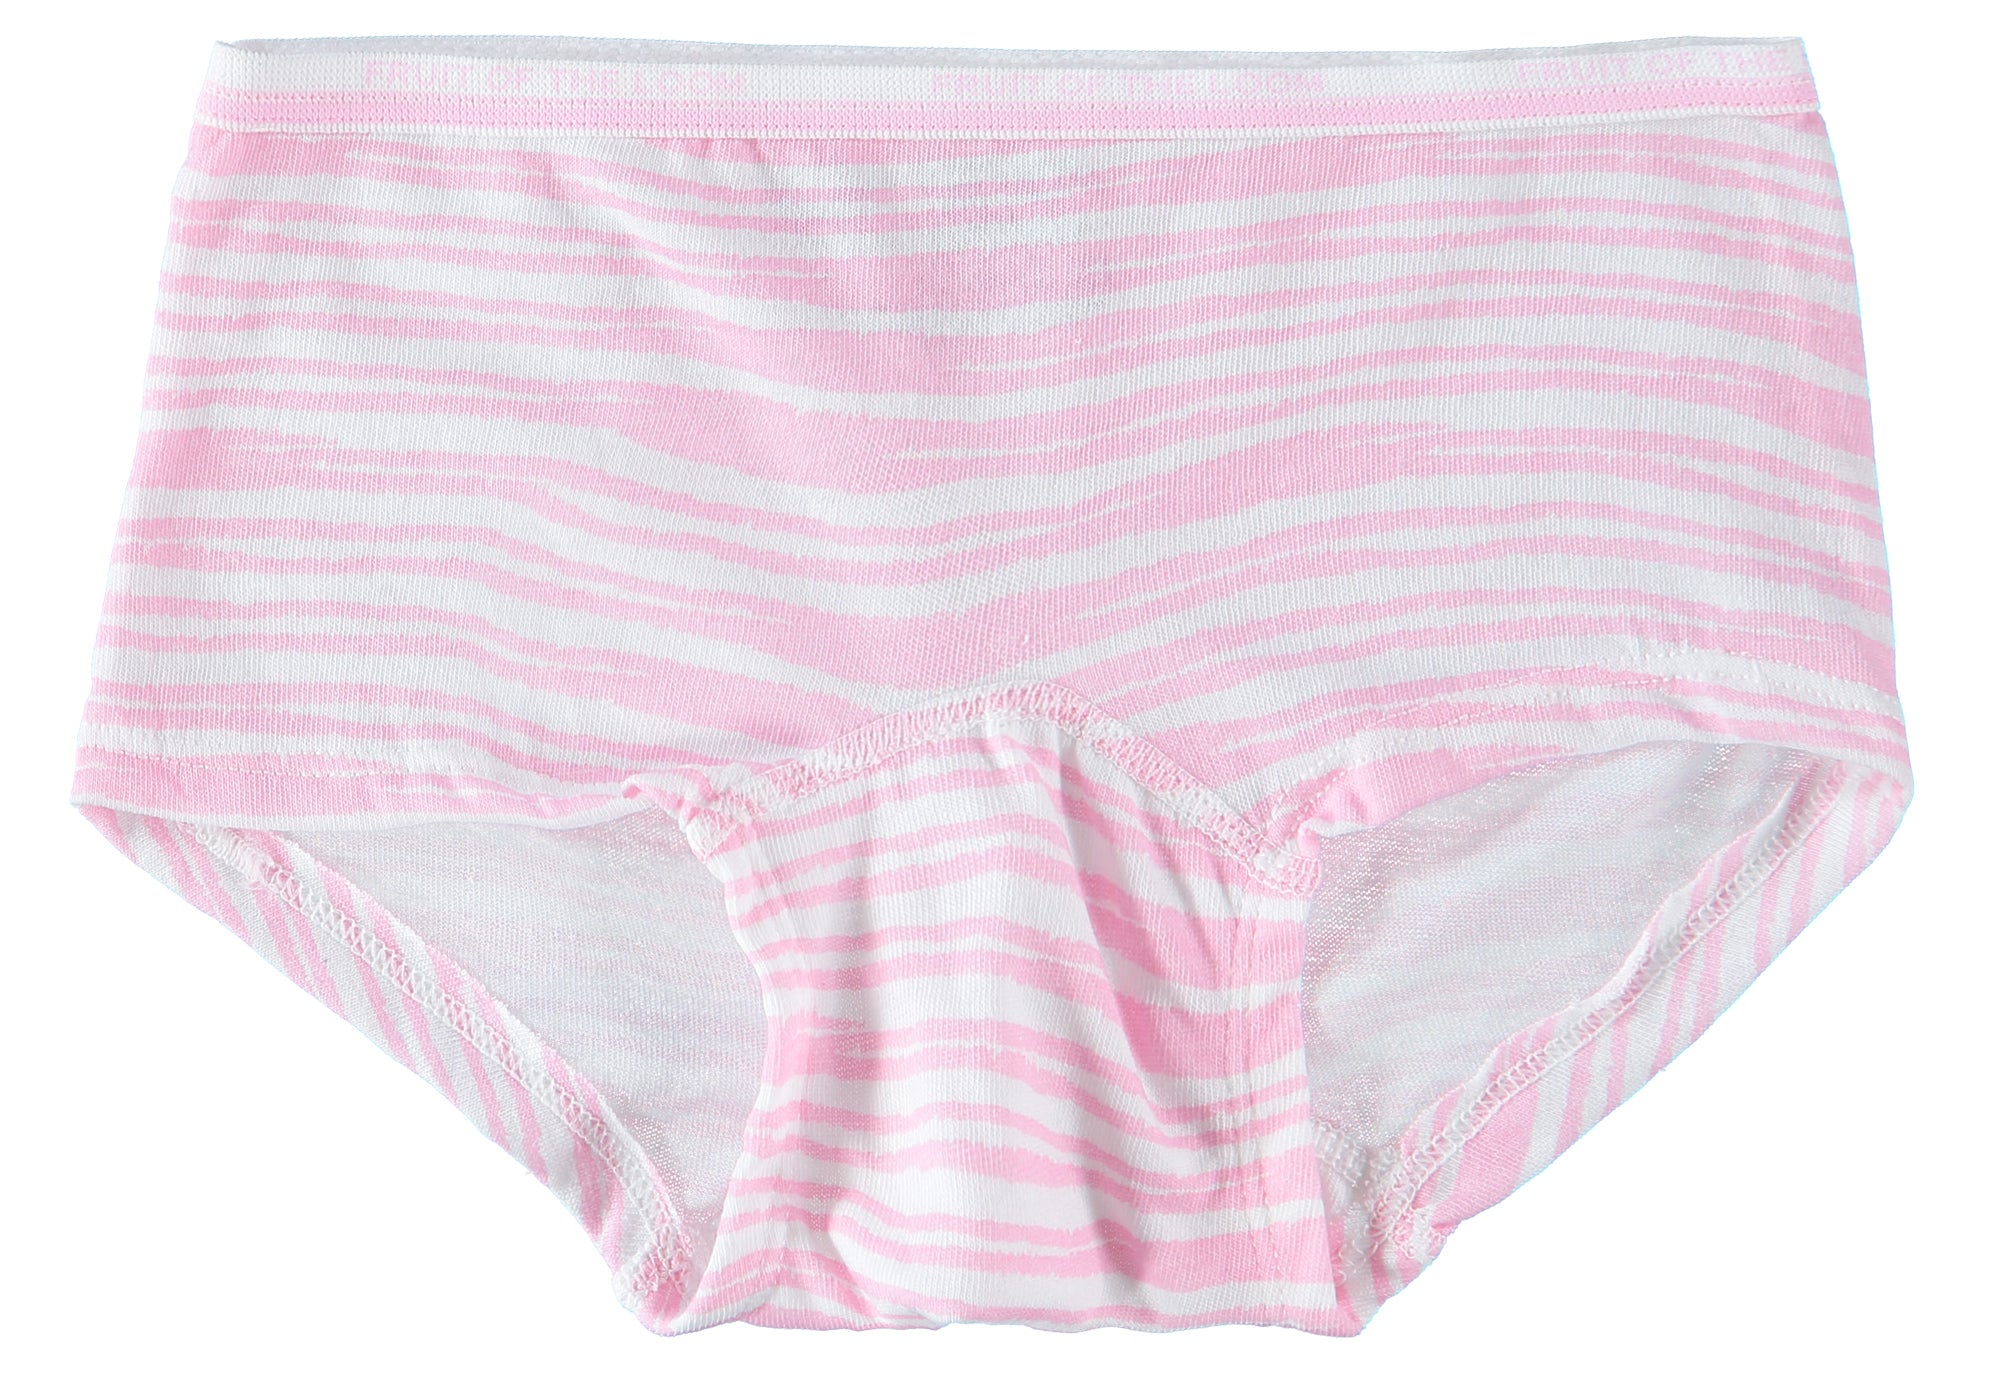 Fruit of the Loom Girls' Cotton Boyshort Underwear